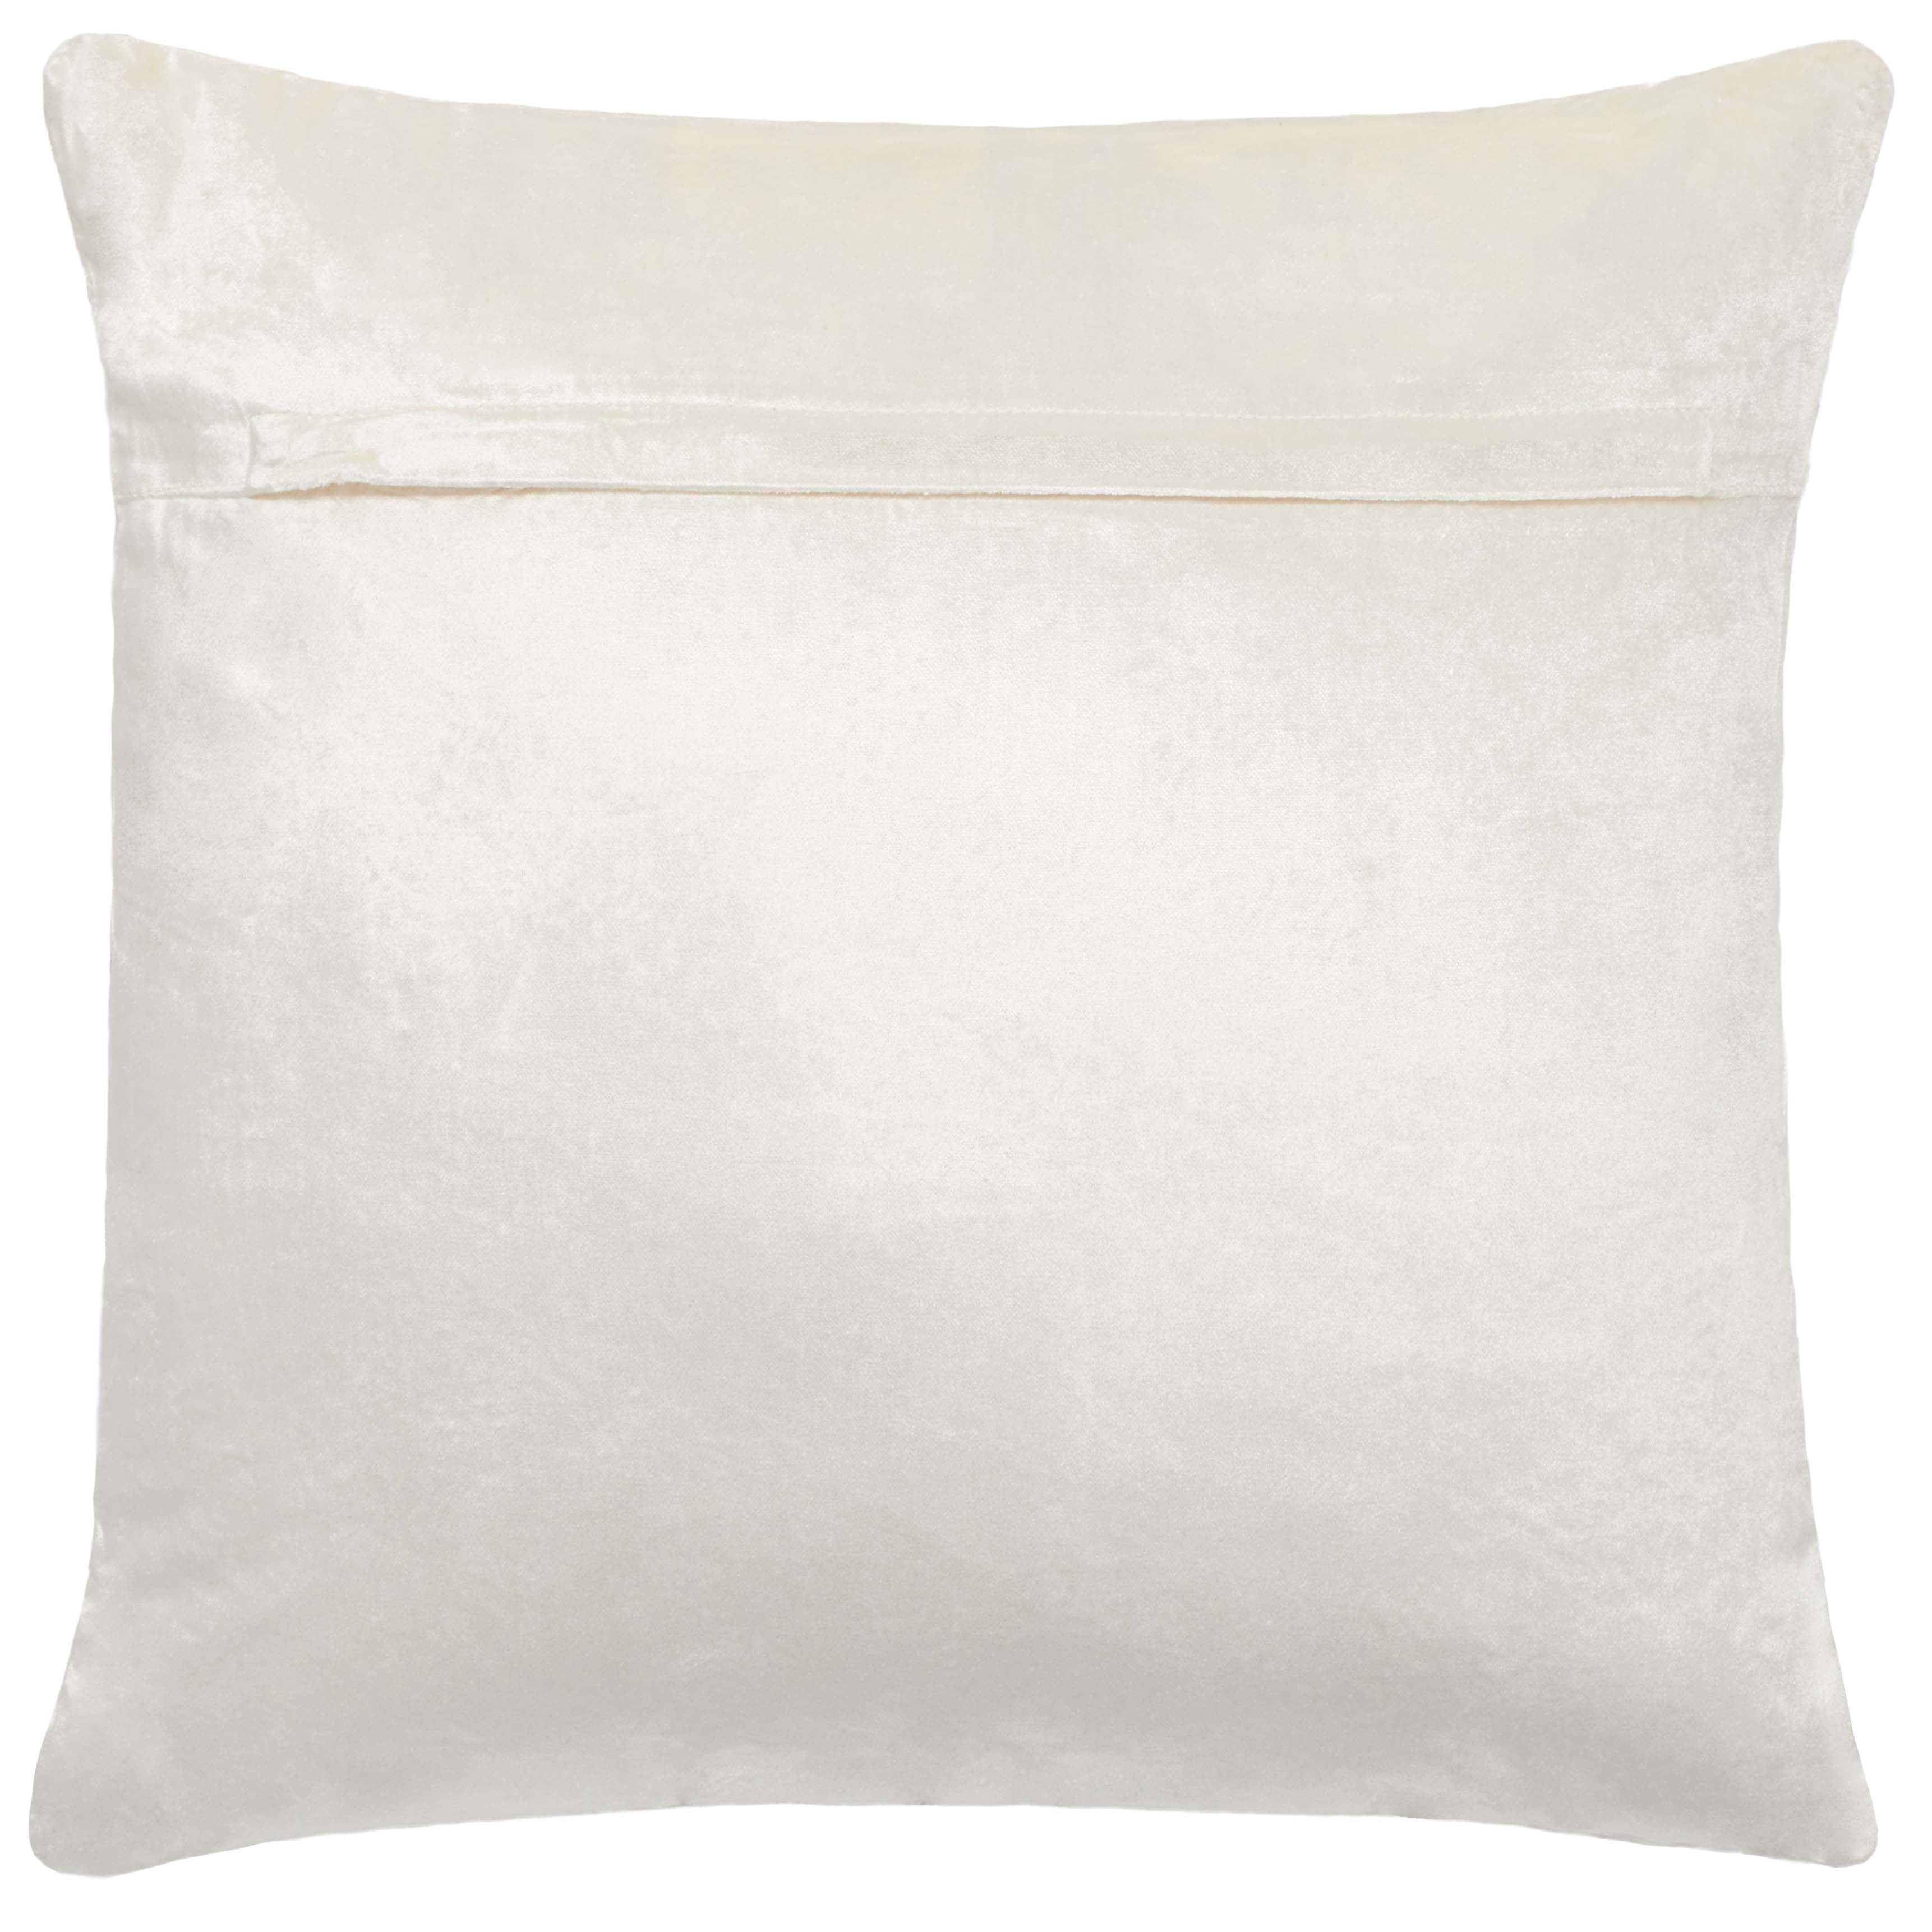 Safavieh Metallic Pillow , PLS853 - Grey / Gold